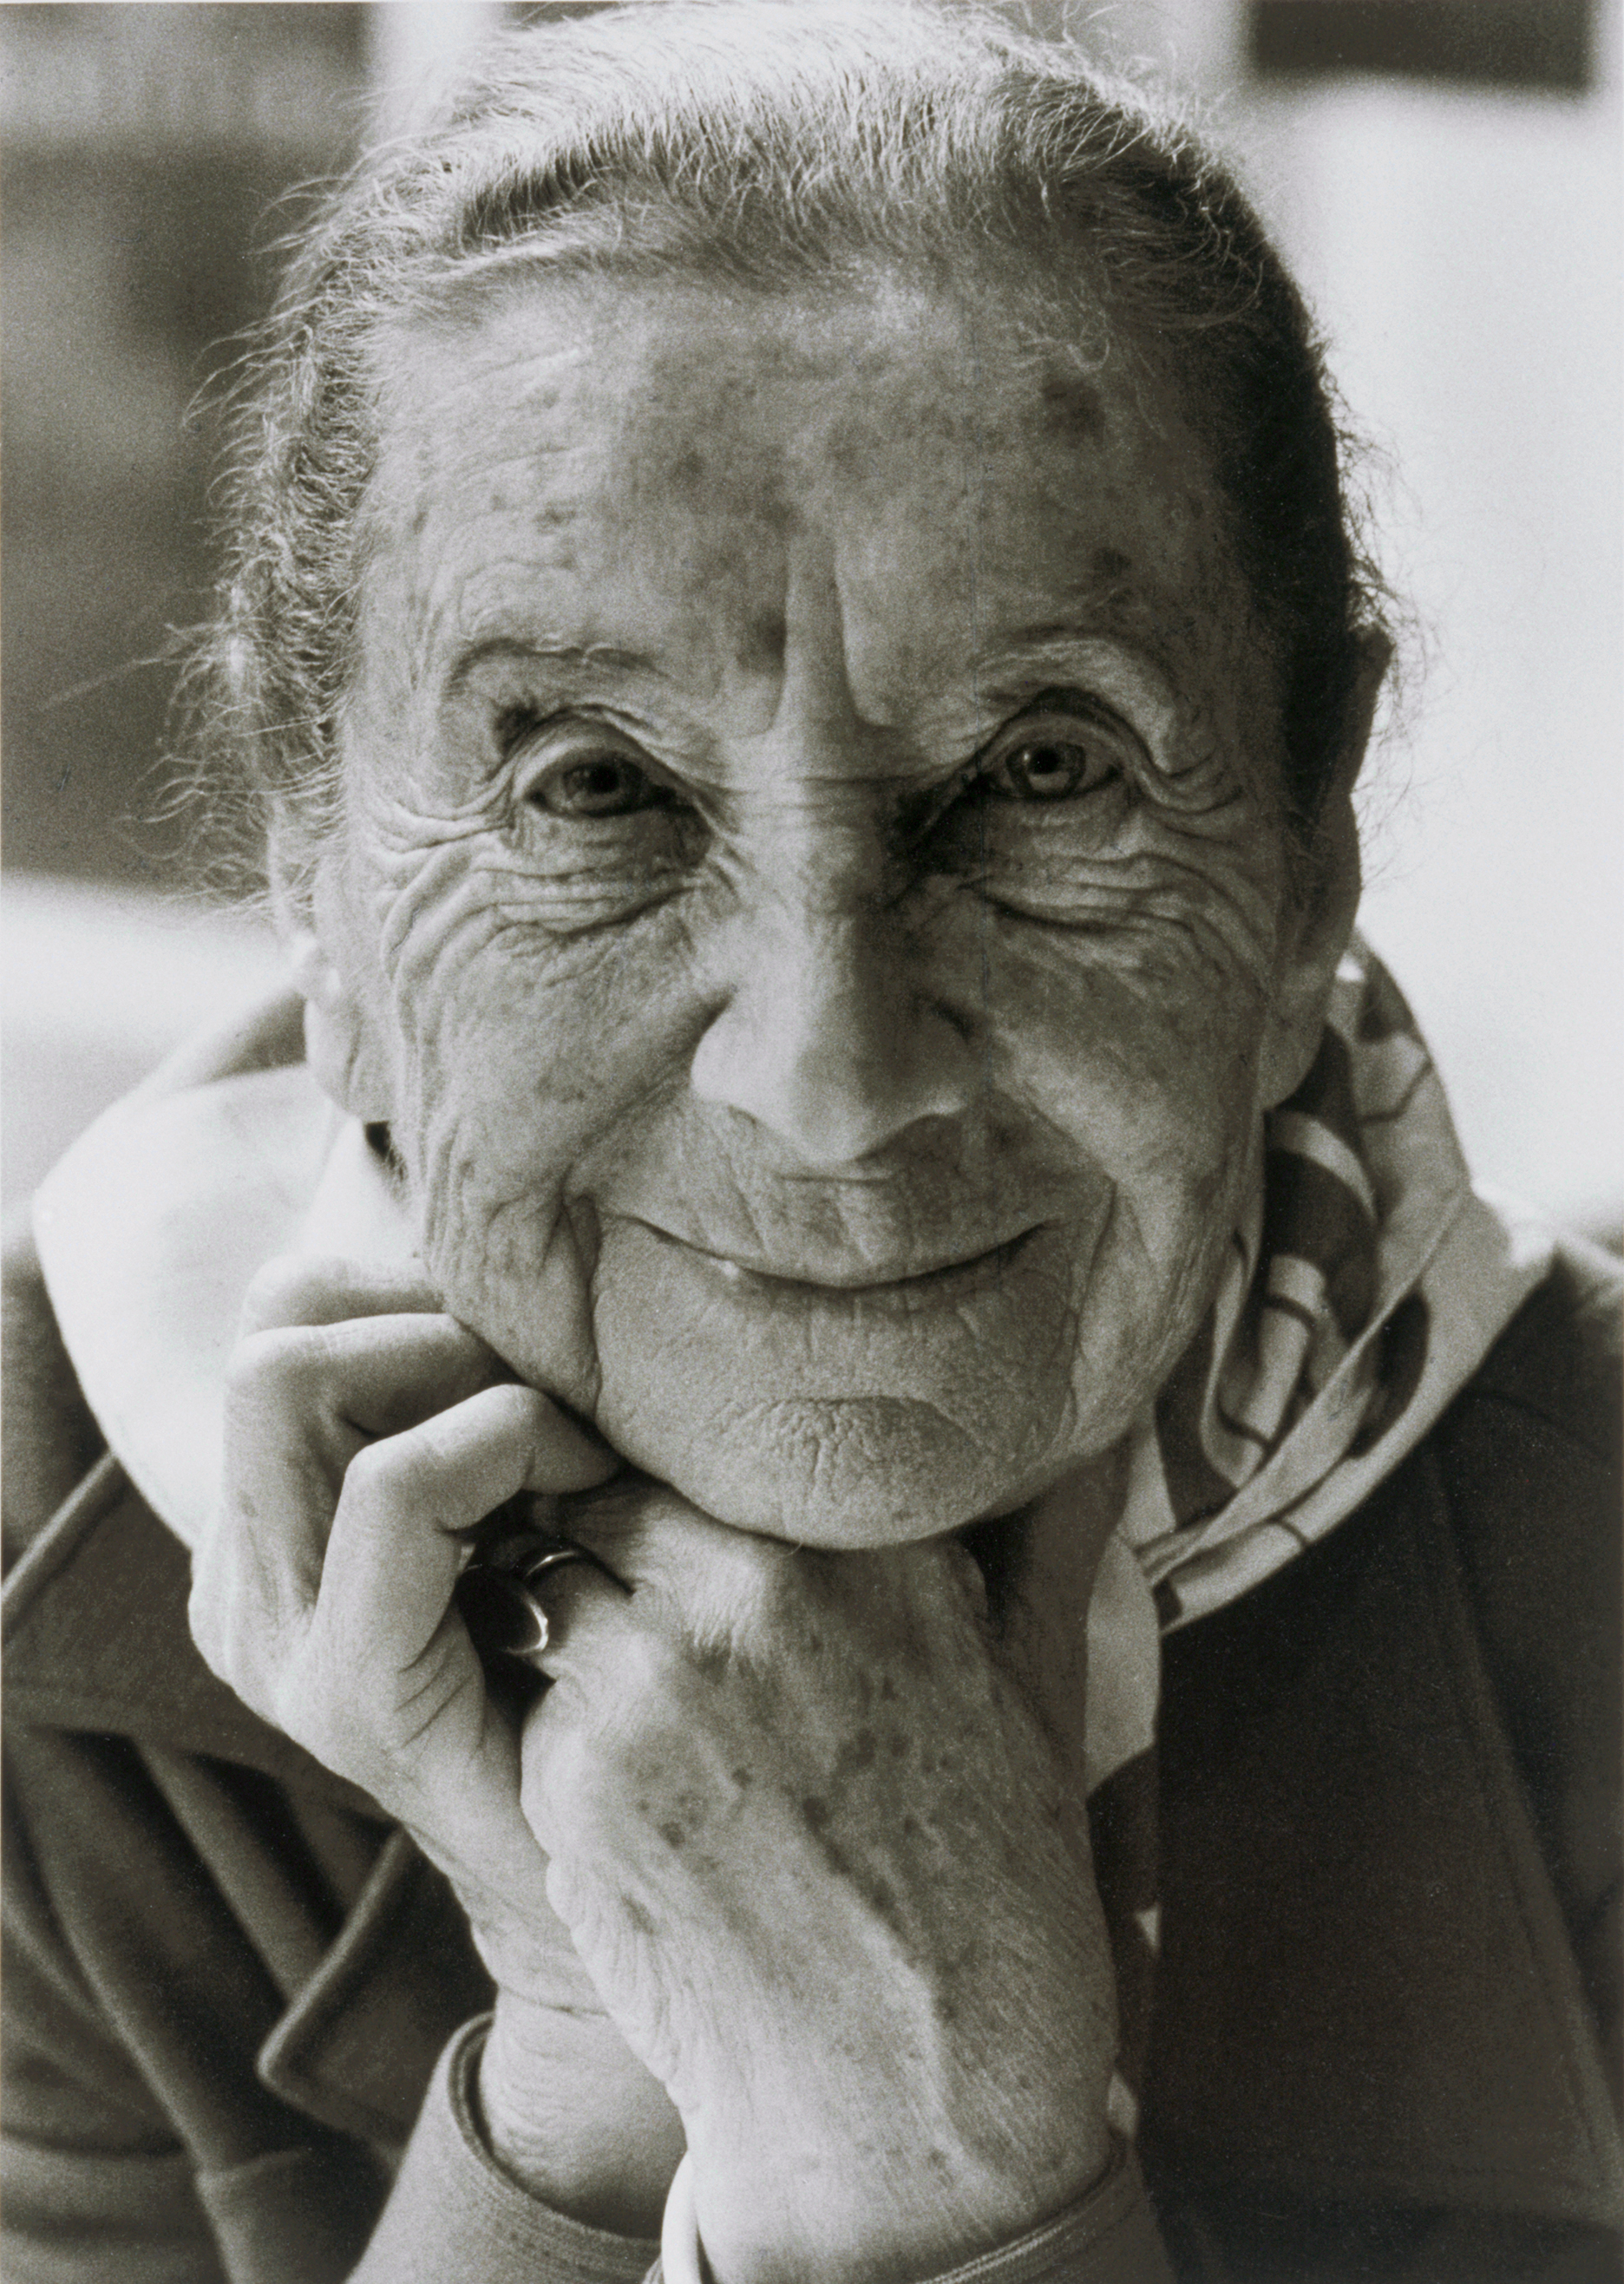 Lucia Moholy porträtiert von Fritz Kempe, 1980